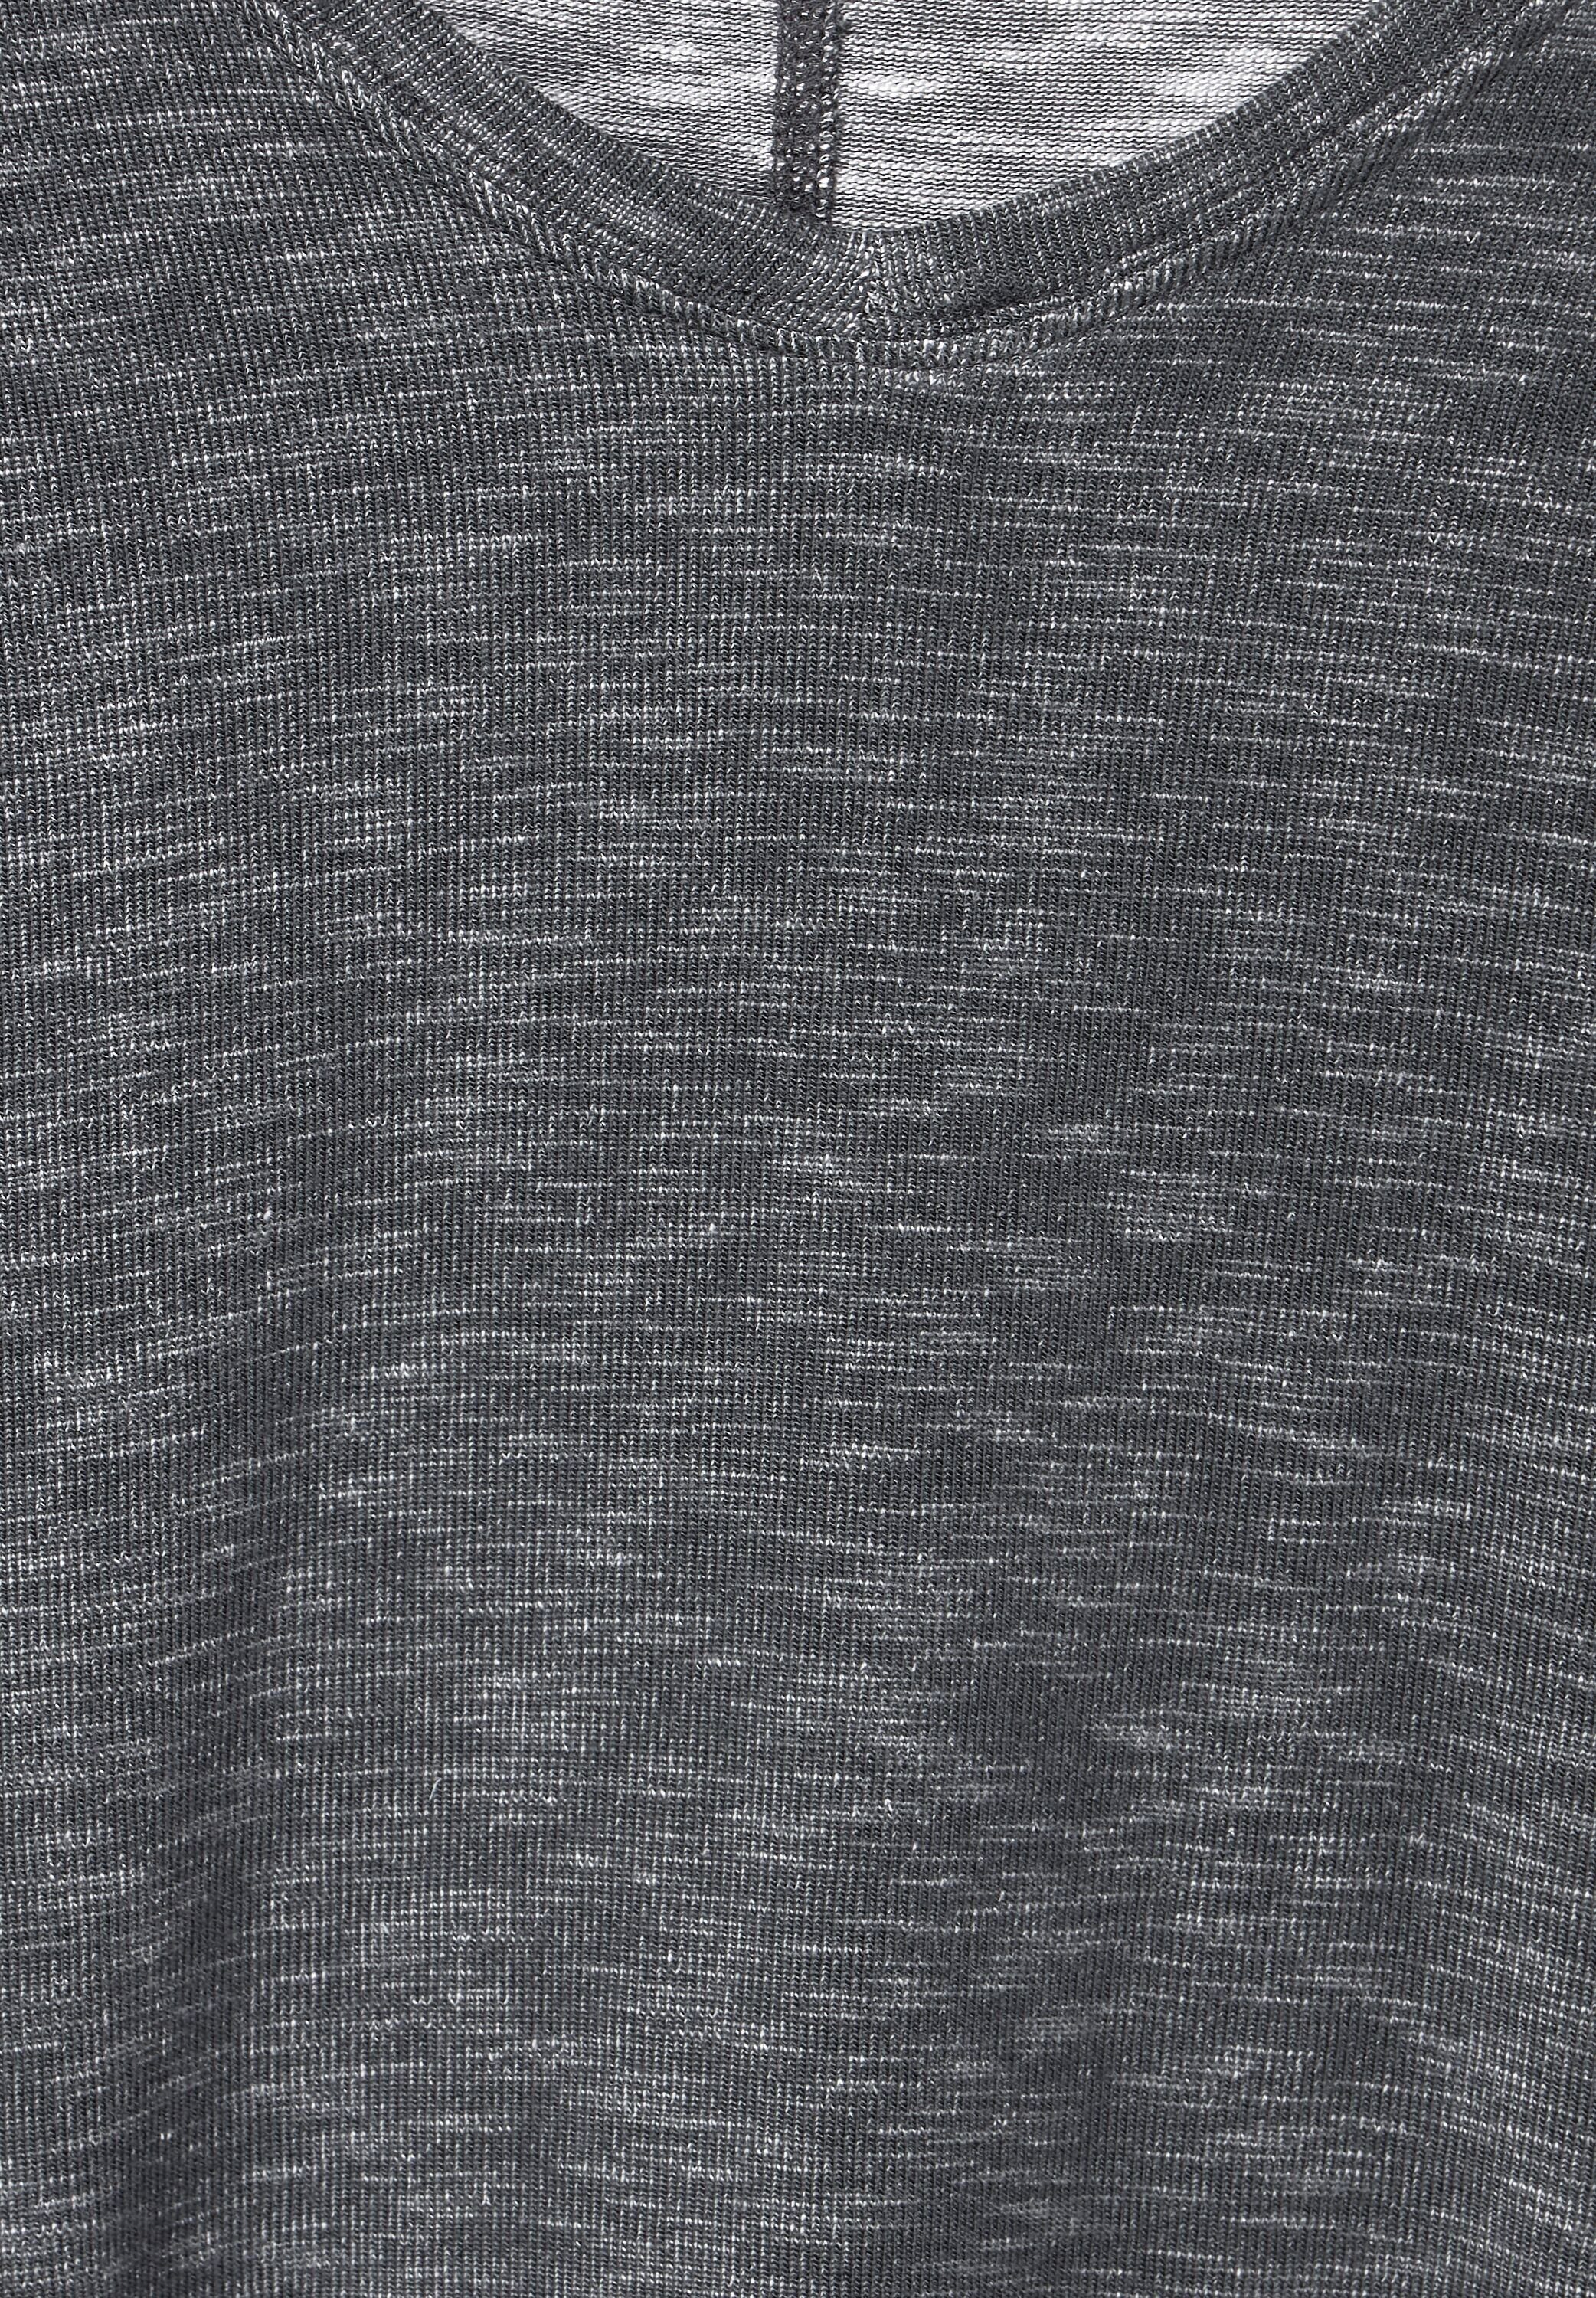 Cecil T-Shirt mit abgerundetem V-Ausschnitt easy melange khaki